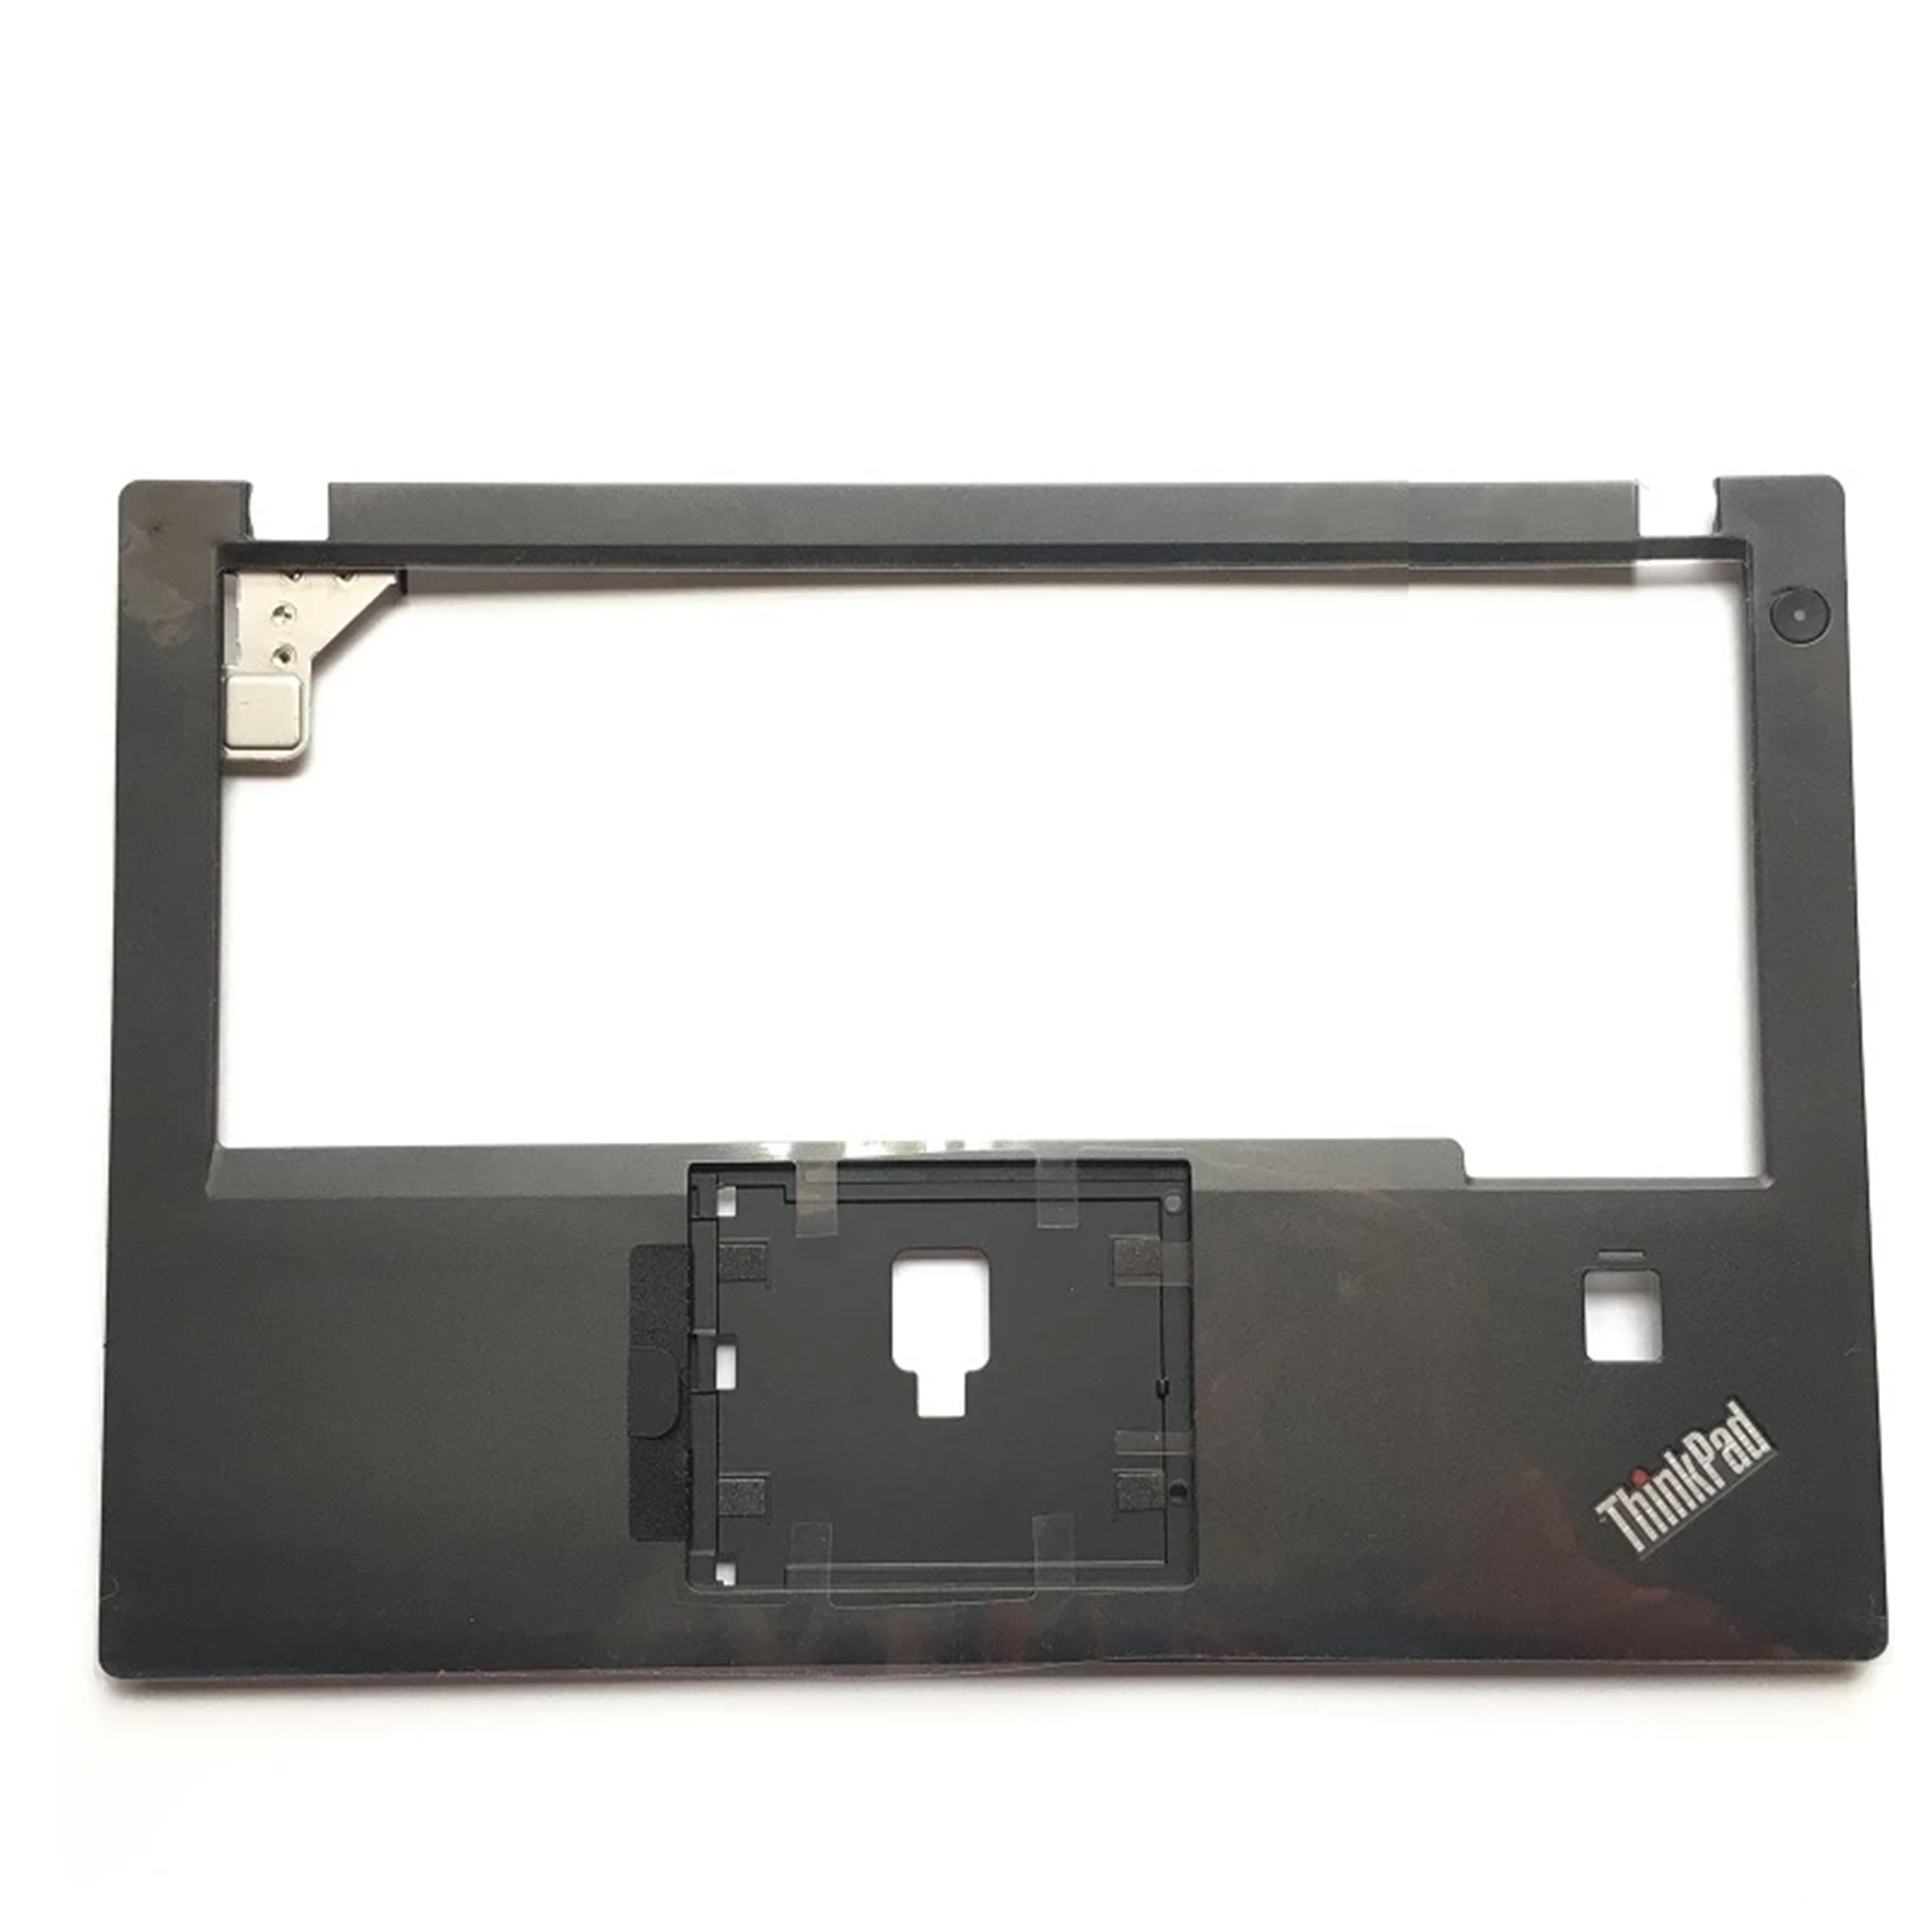 Lenovo ThinkPad Black Palmrest Housing Cover with Fingerprint Reader Compatible Models: ThinkPad X270 | X275 Part Number: 01HW957 SM10M38703.